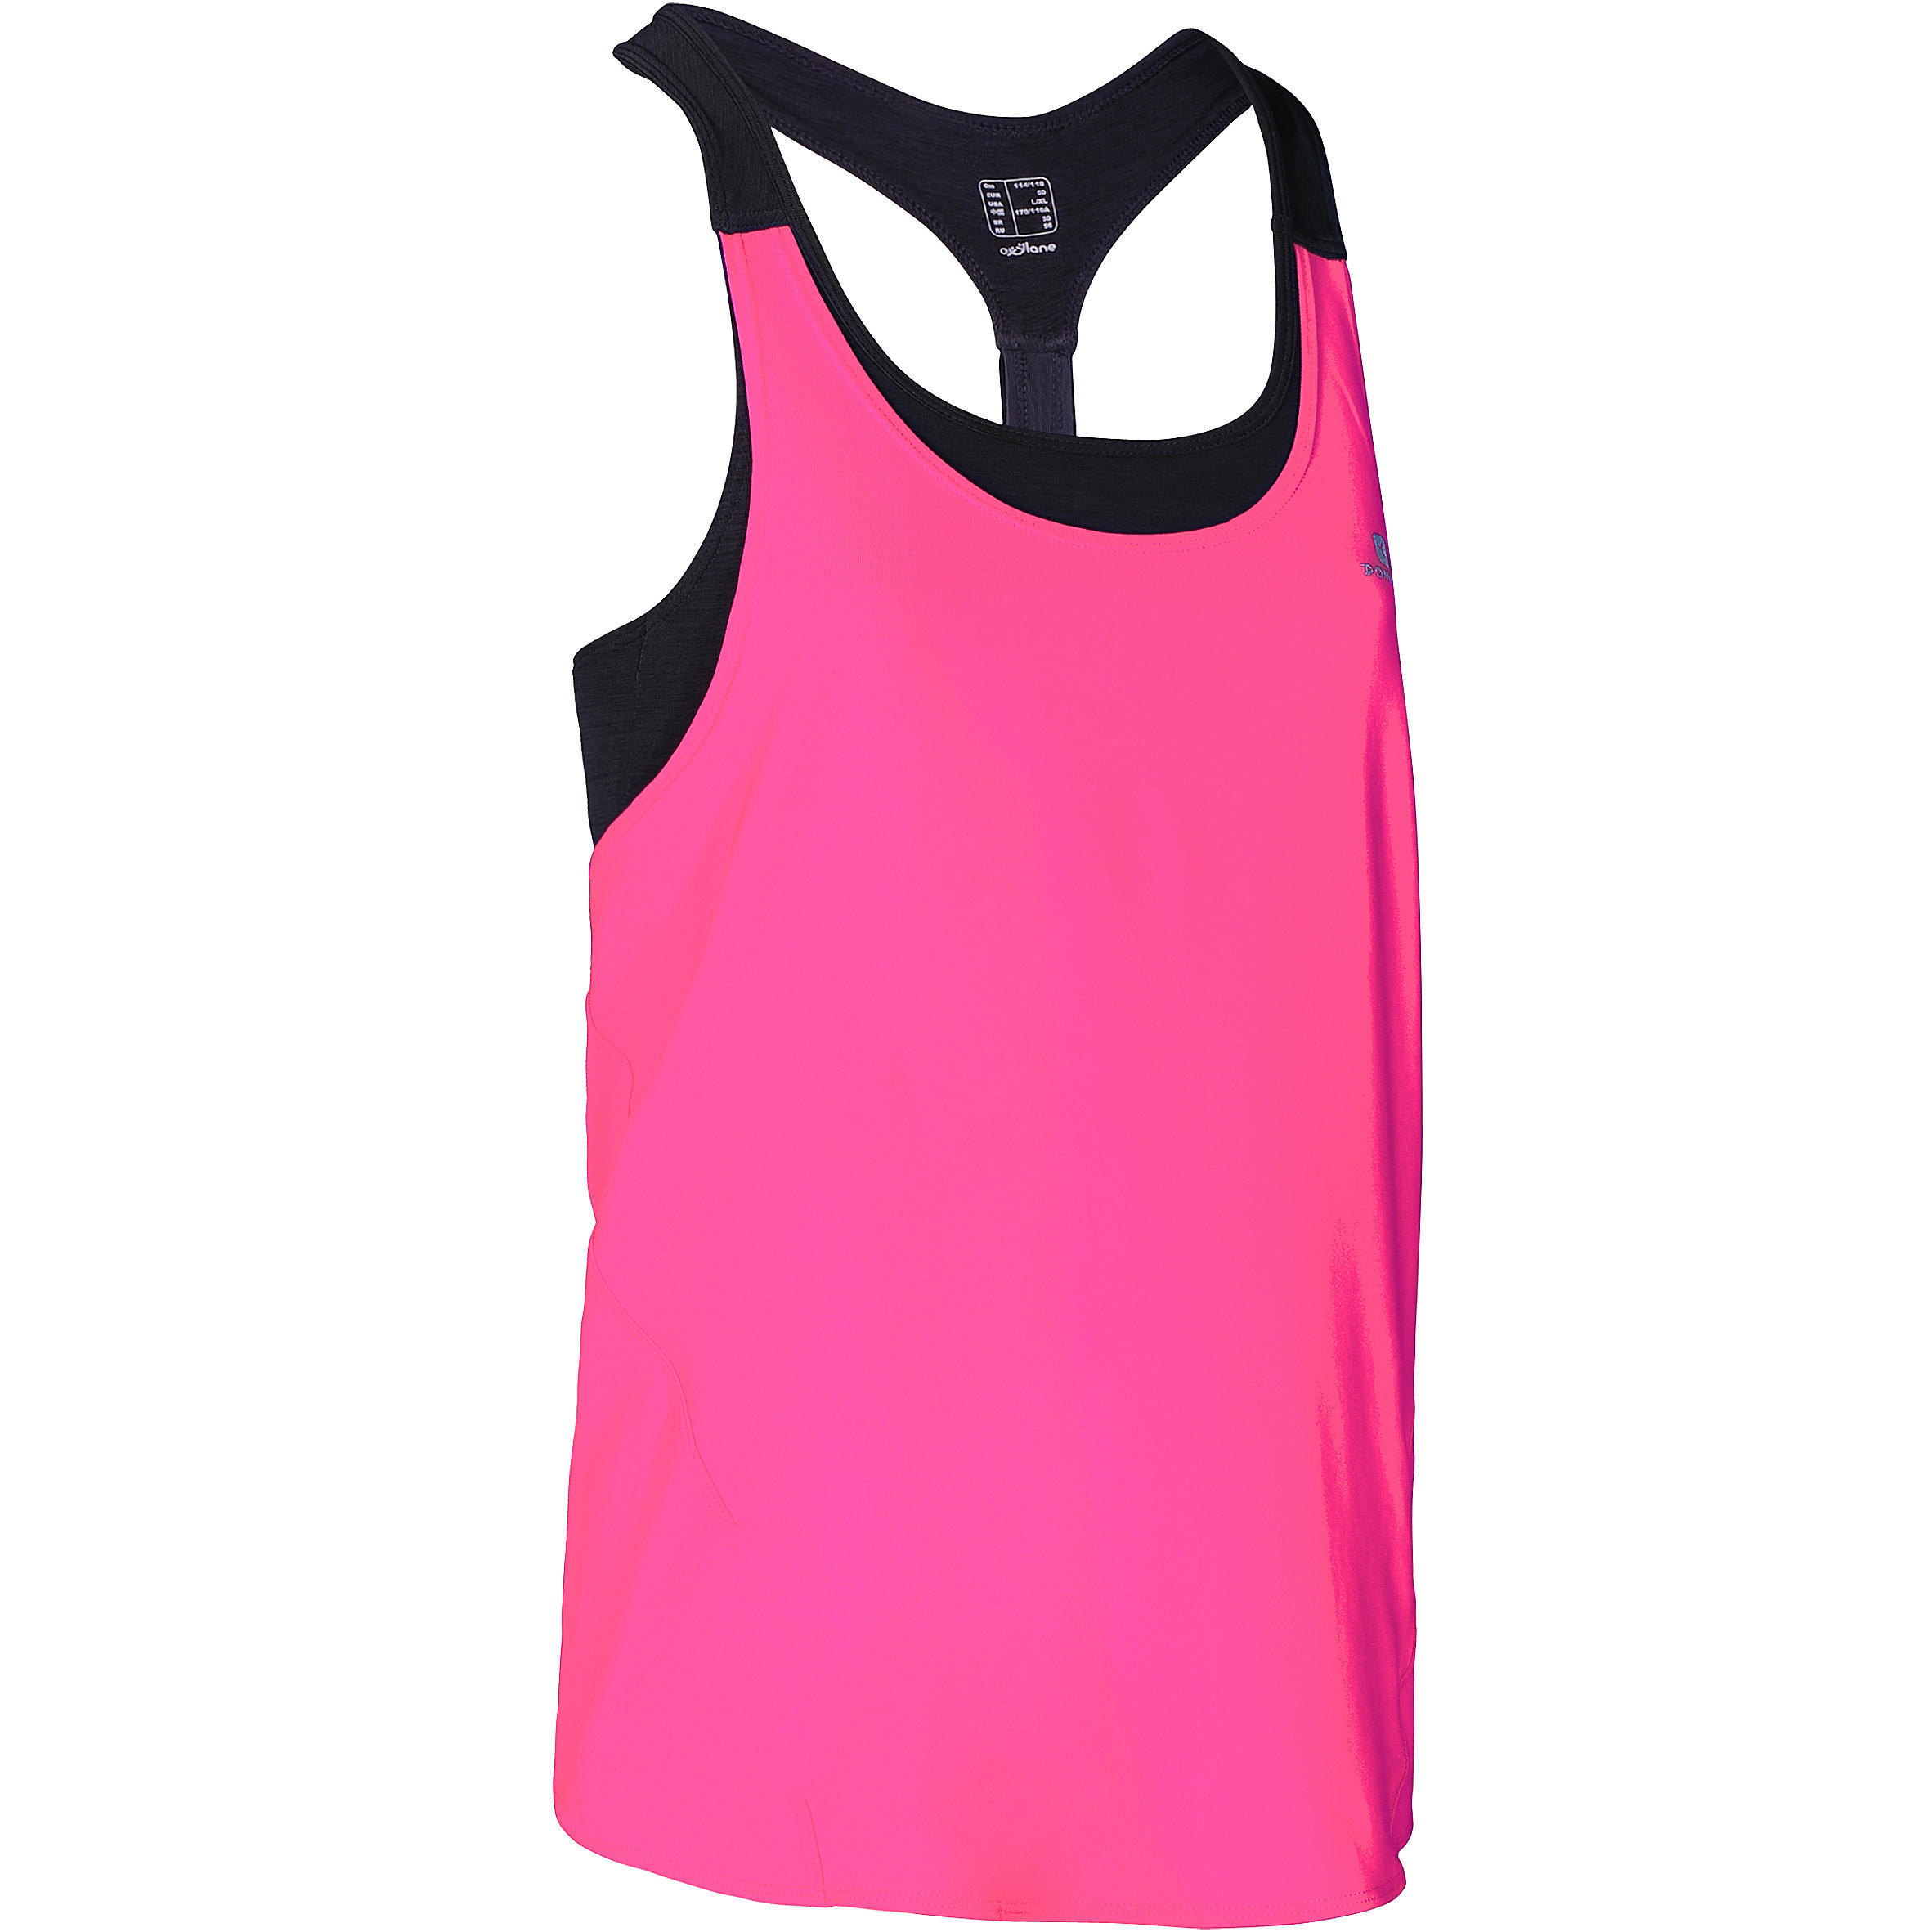 DOMYOS Energy Women's Fitness Tank Top with Built-in Bra - Grey/Pink